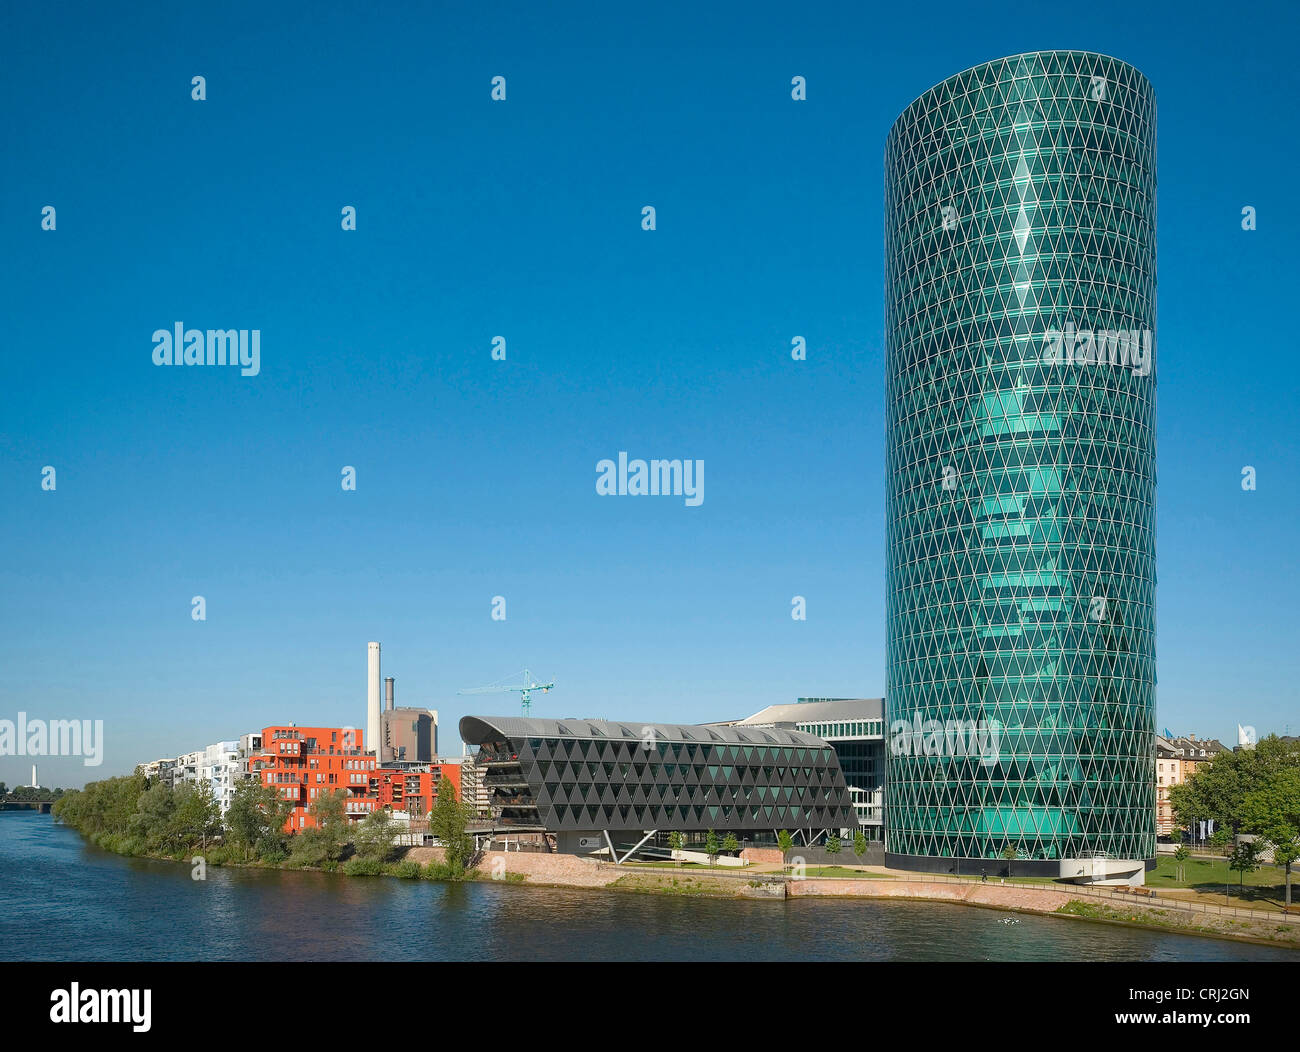 Westharbour, Tower, Germany, Hesse, Frankfurt am Main Stock Photo